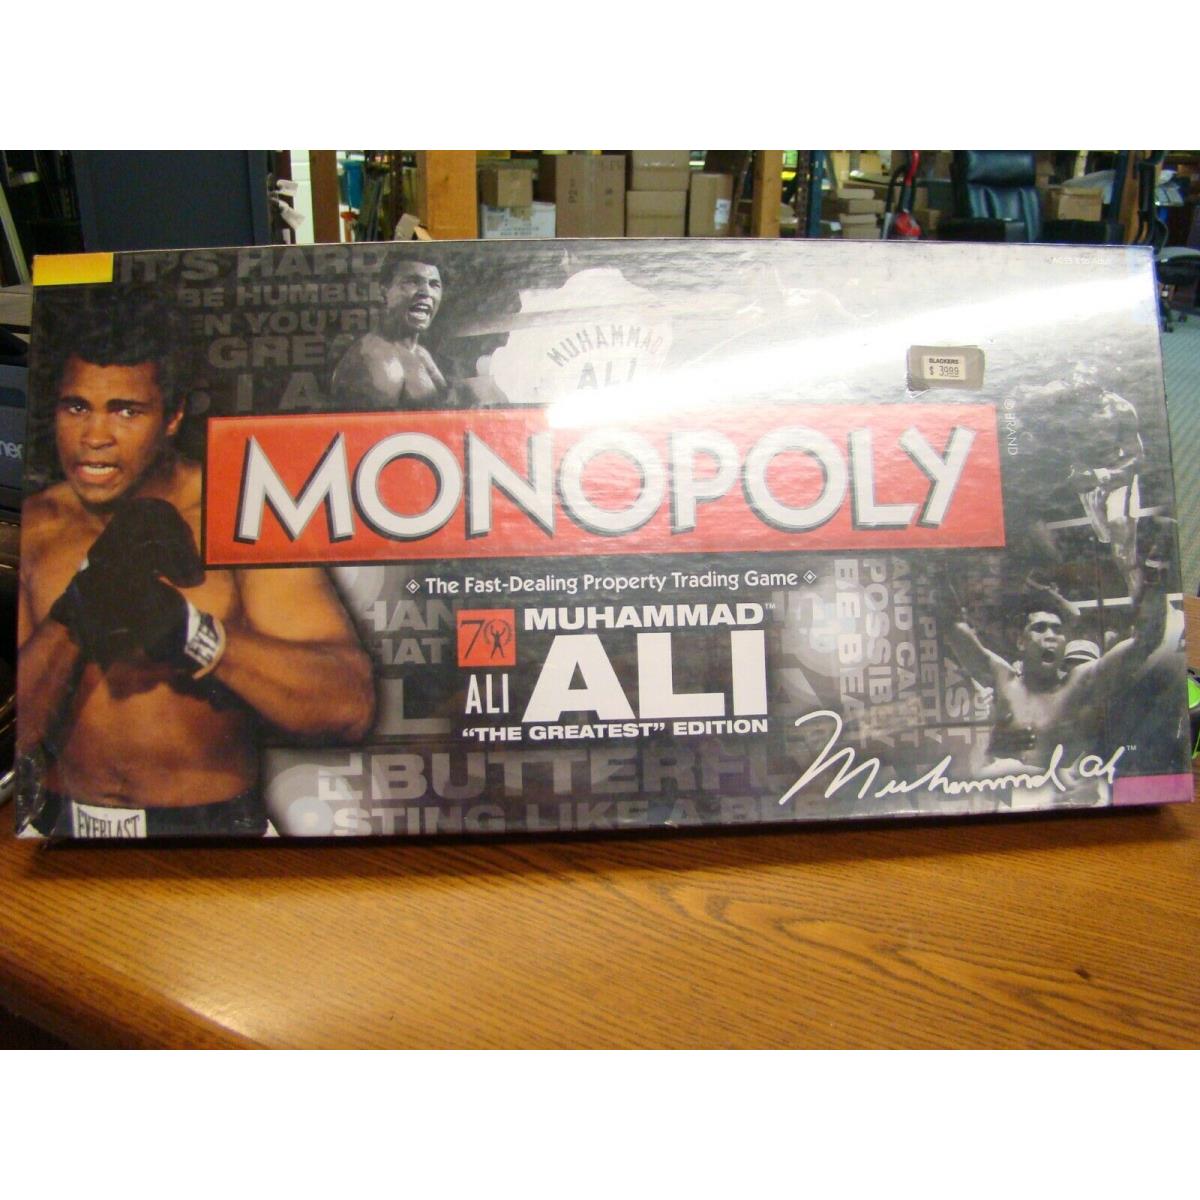 Muhammad Ali Greatest Edition Monopoly